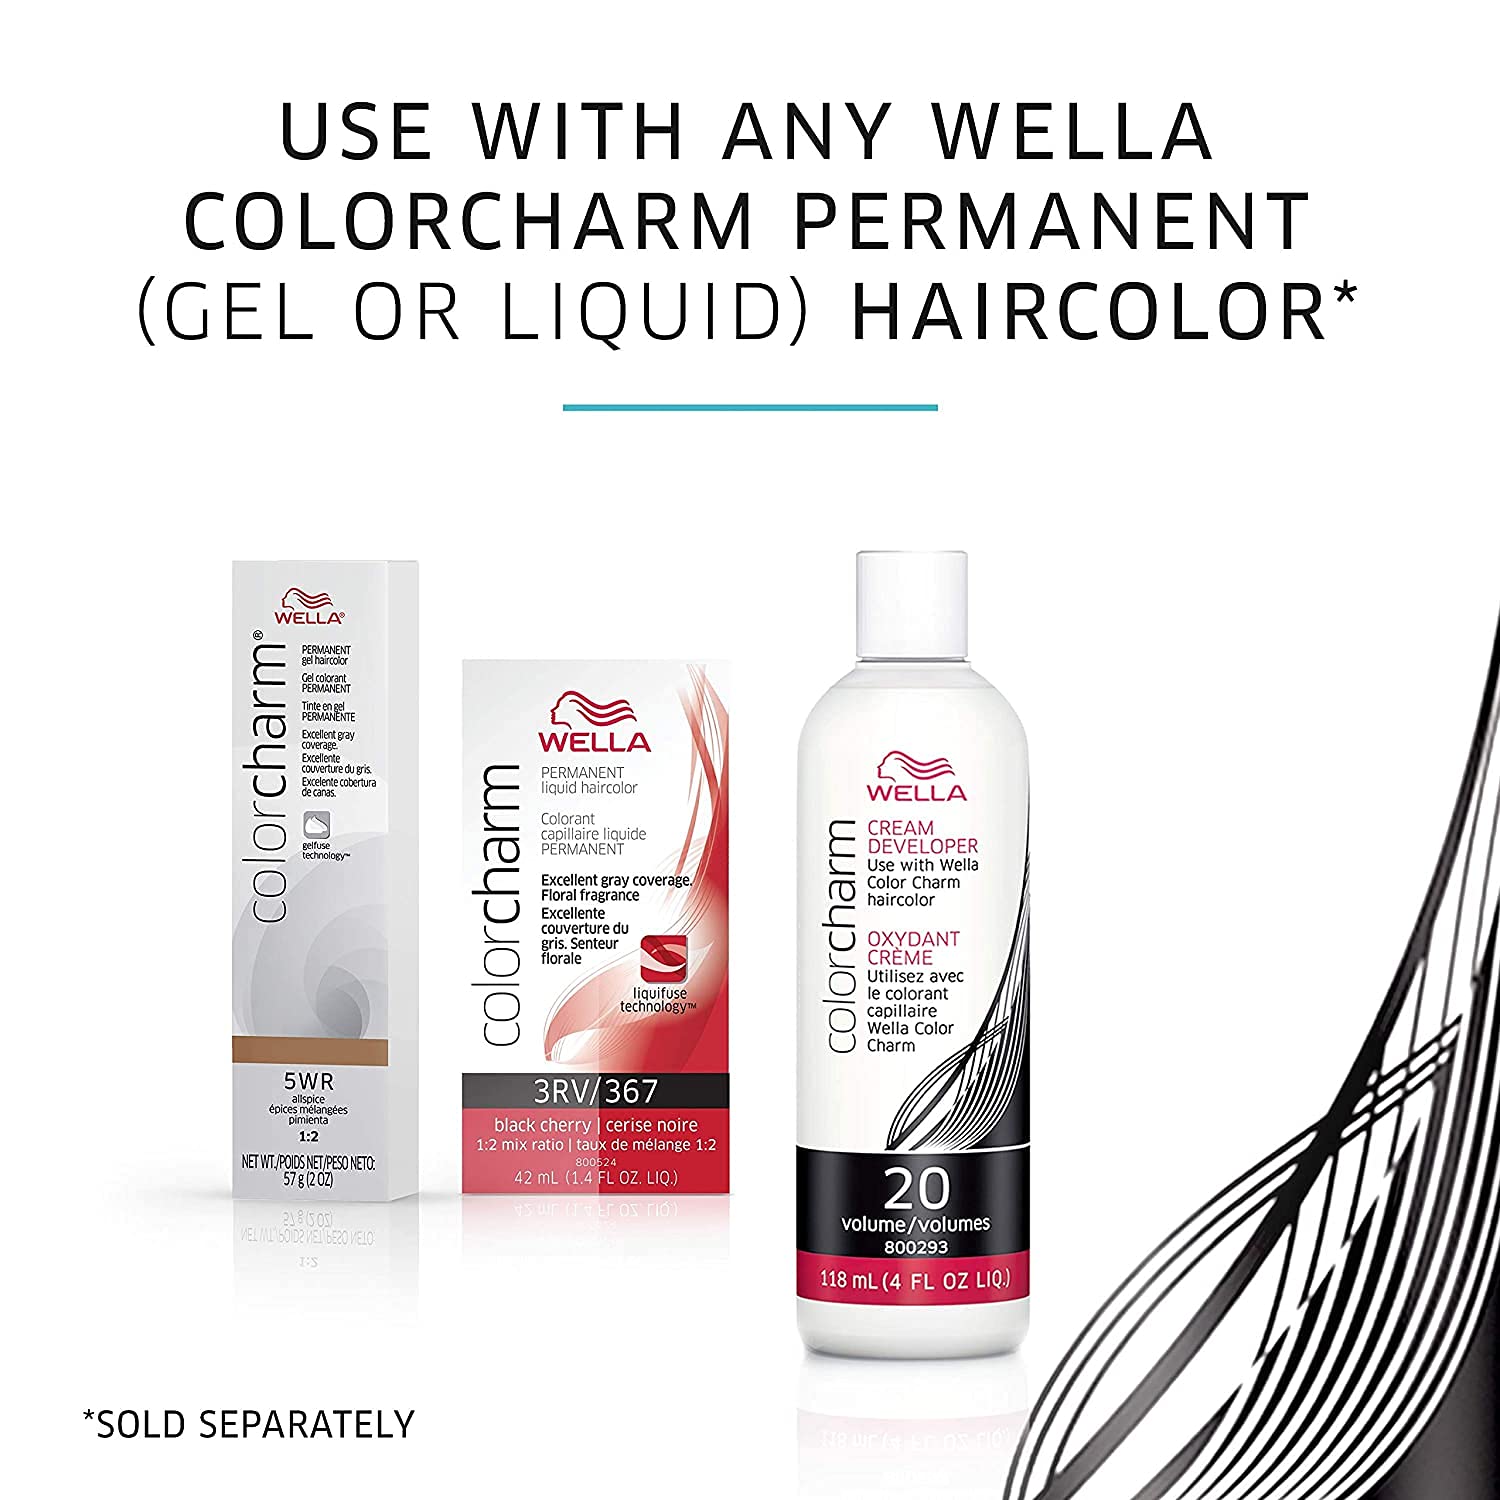 WELLA Color Charm Creme Hair Developer 20 Volume, 32 oz